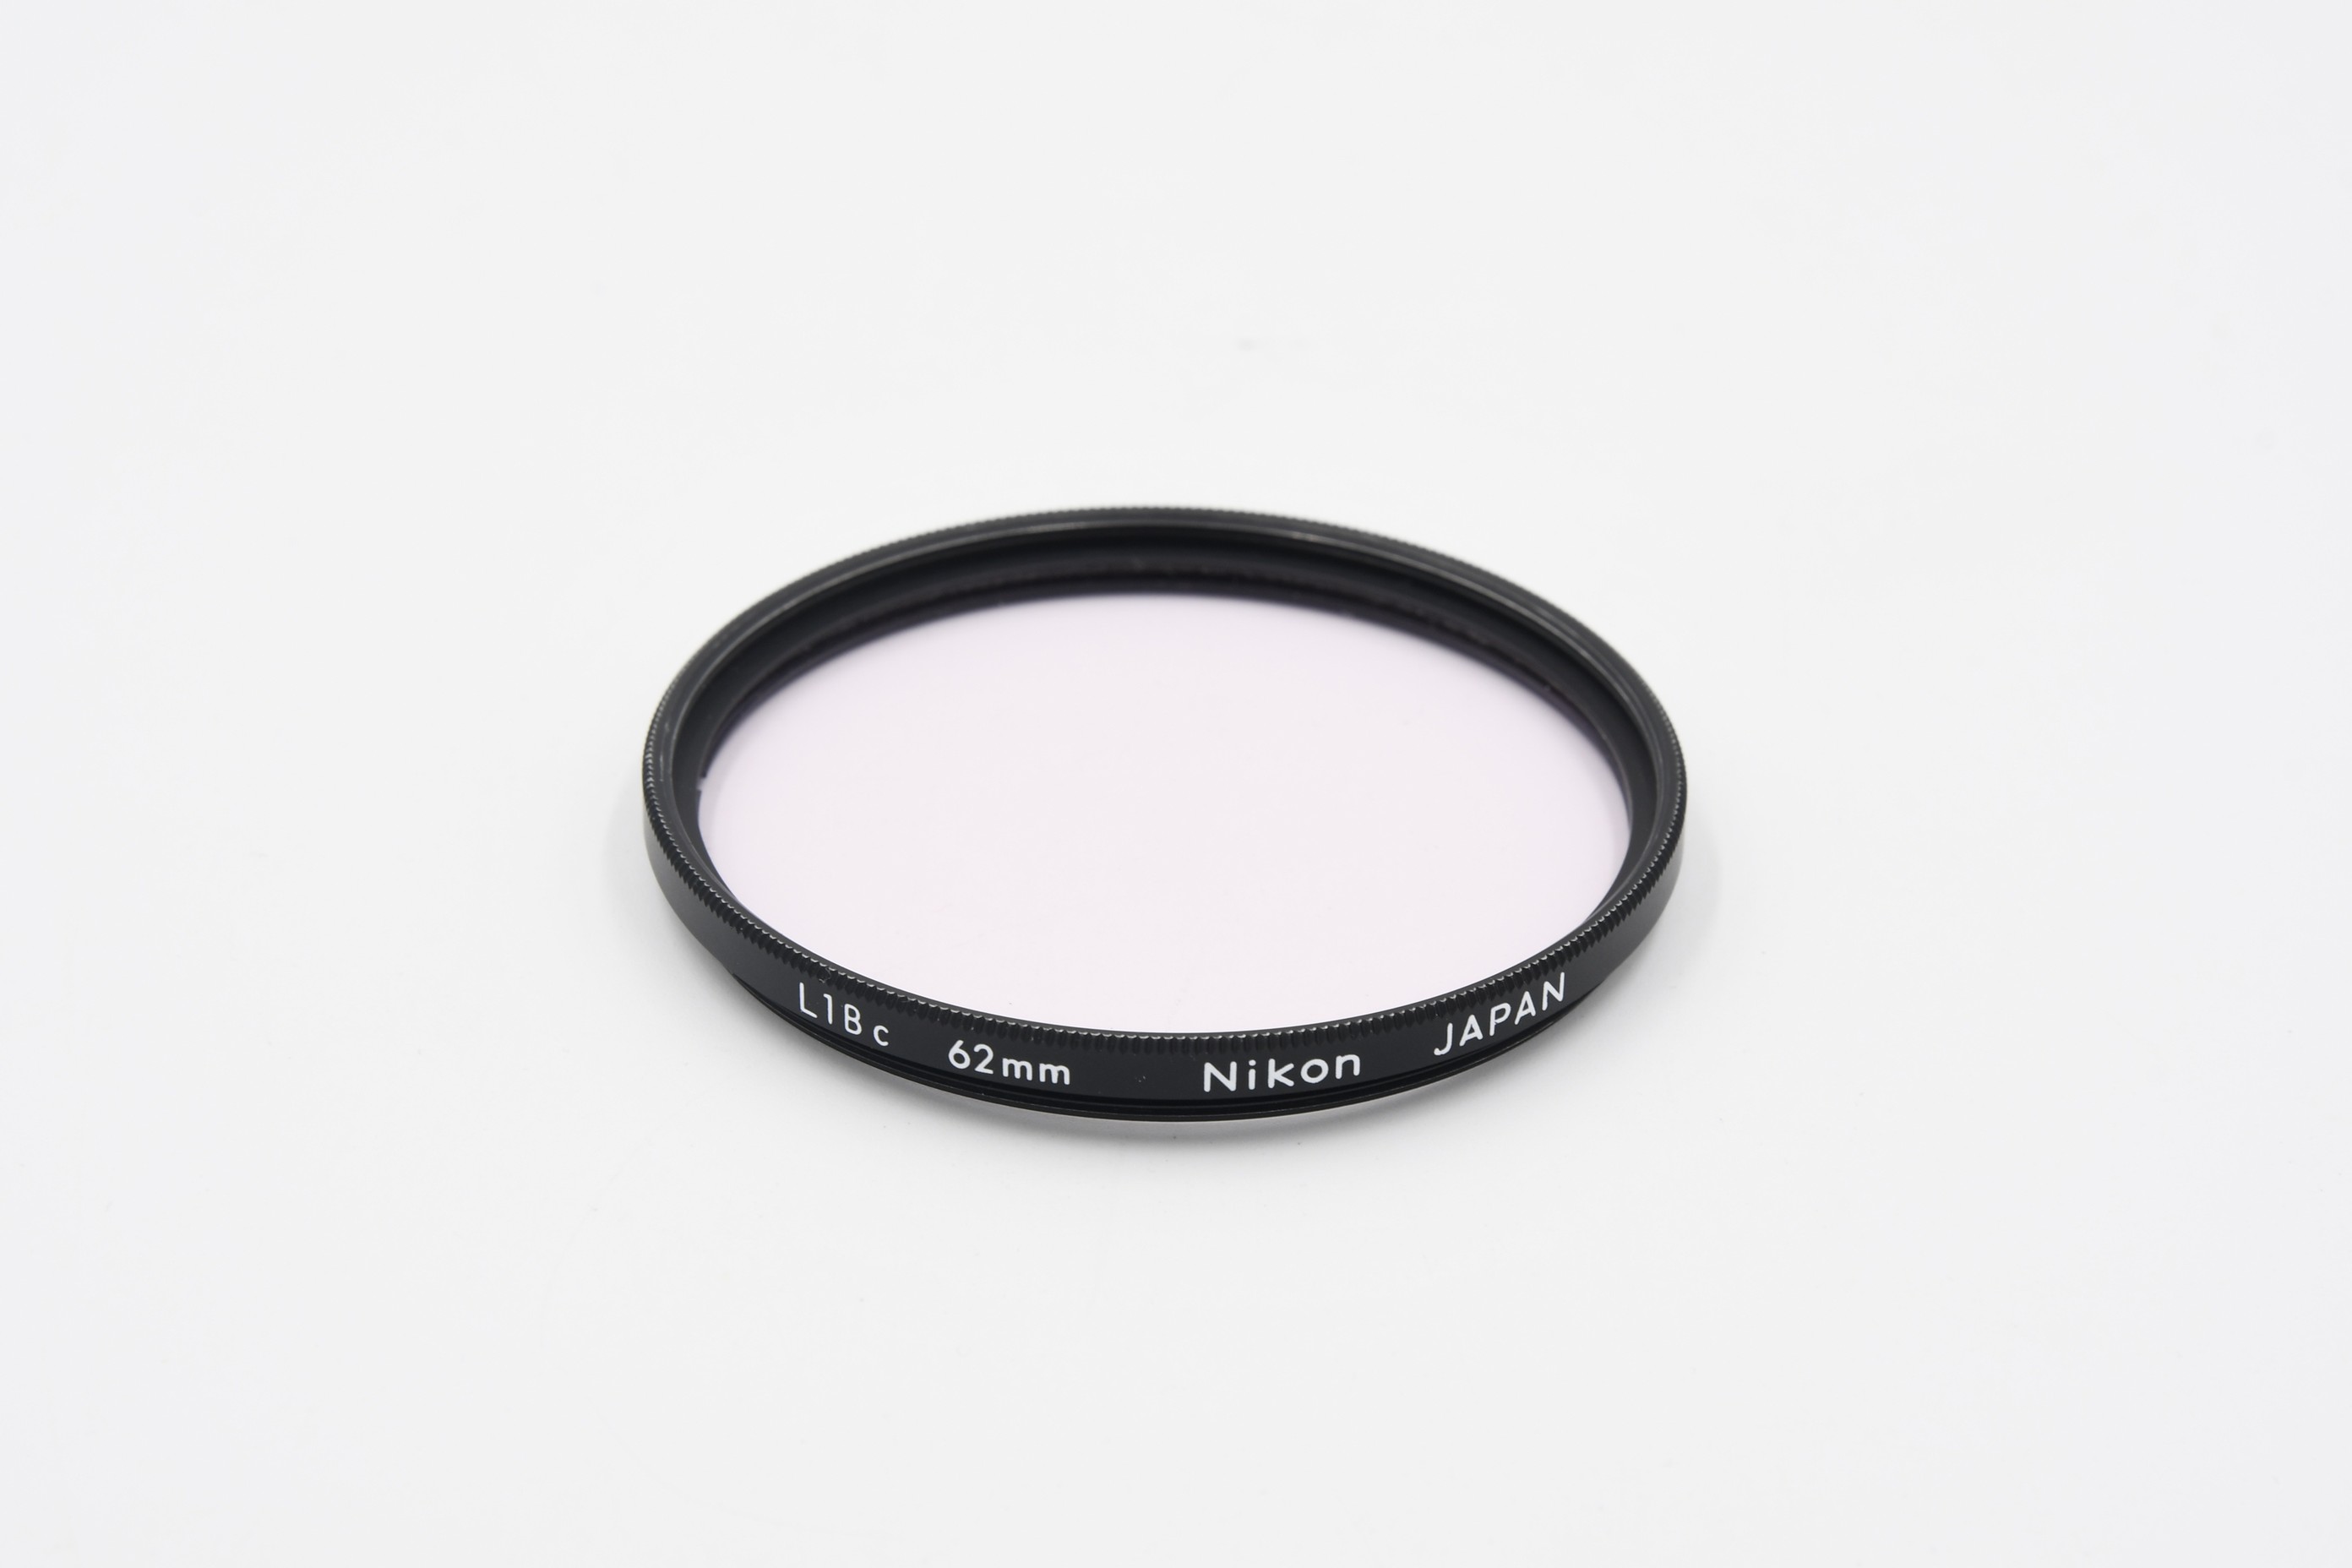 Светофильтр Nikon Skylight L1Bc 62mm (состояние 5)